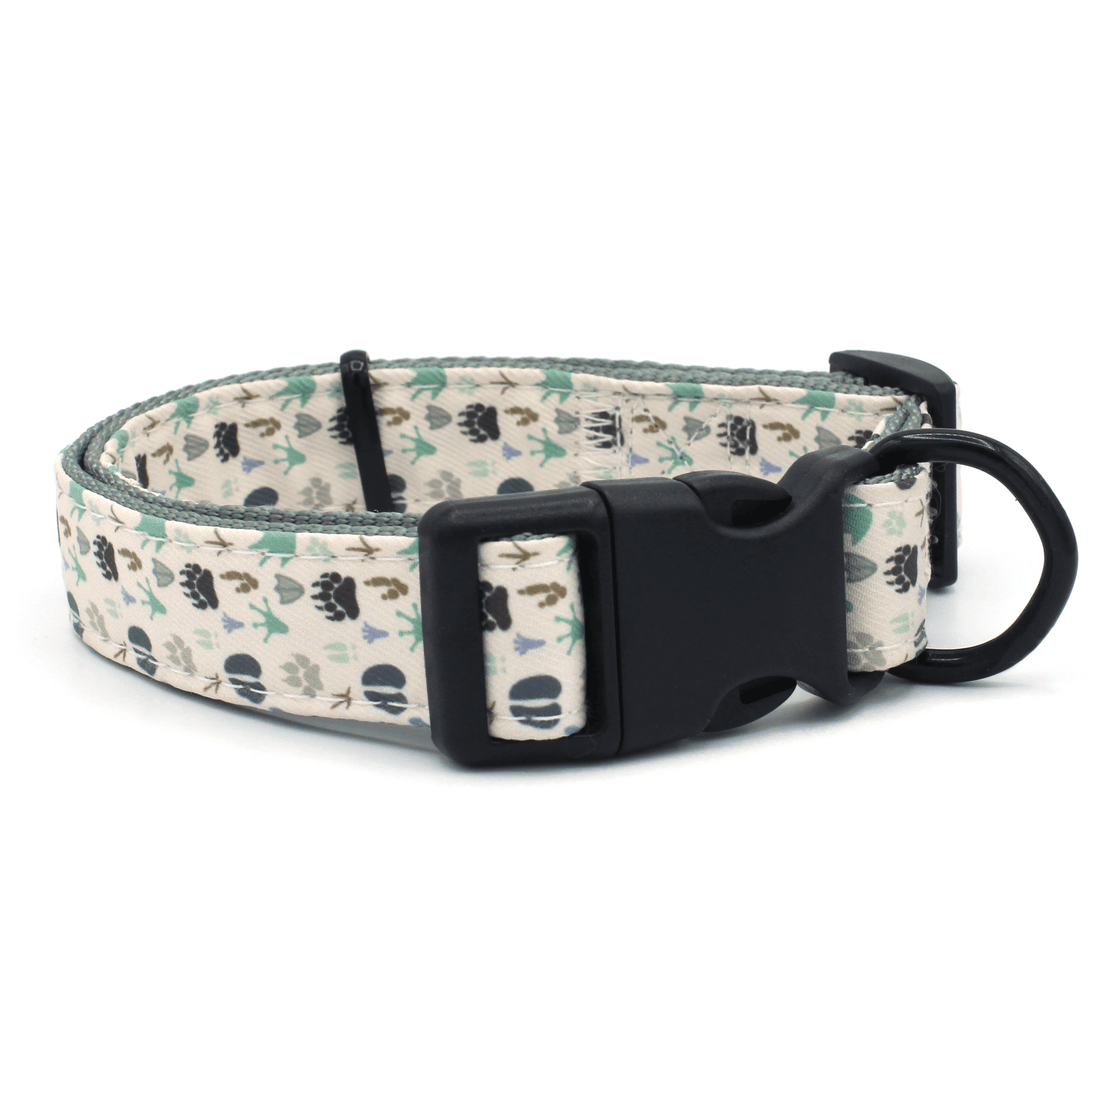 Buy Comfortable & Durable Fabric Dog Collars l Lana Paws